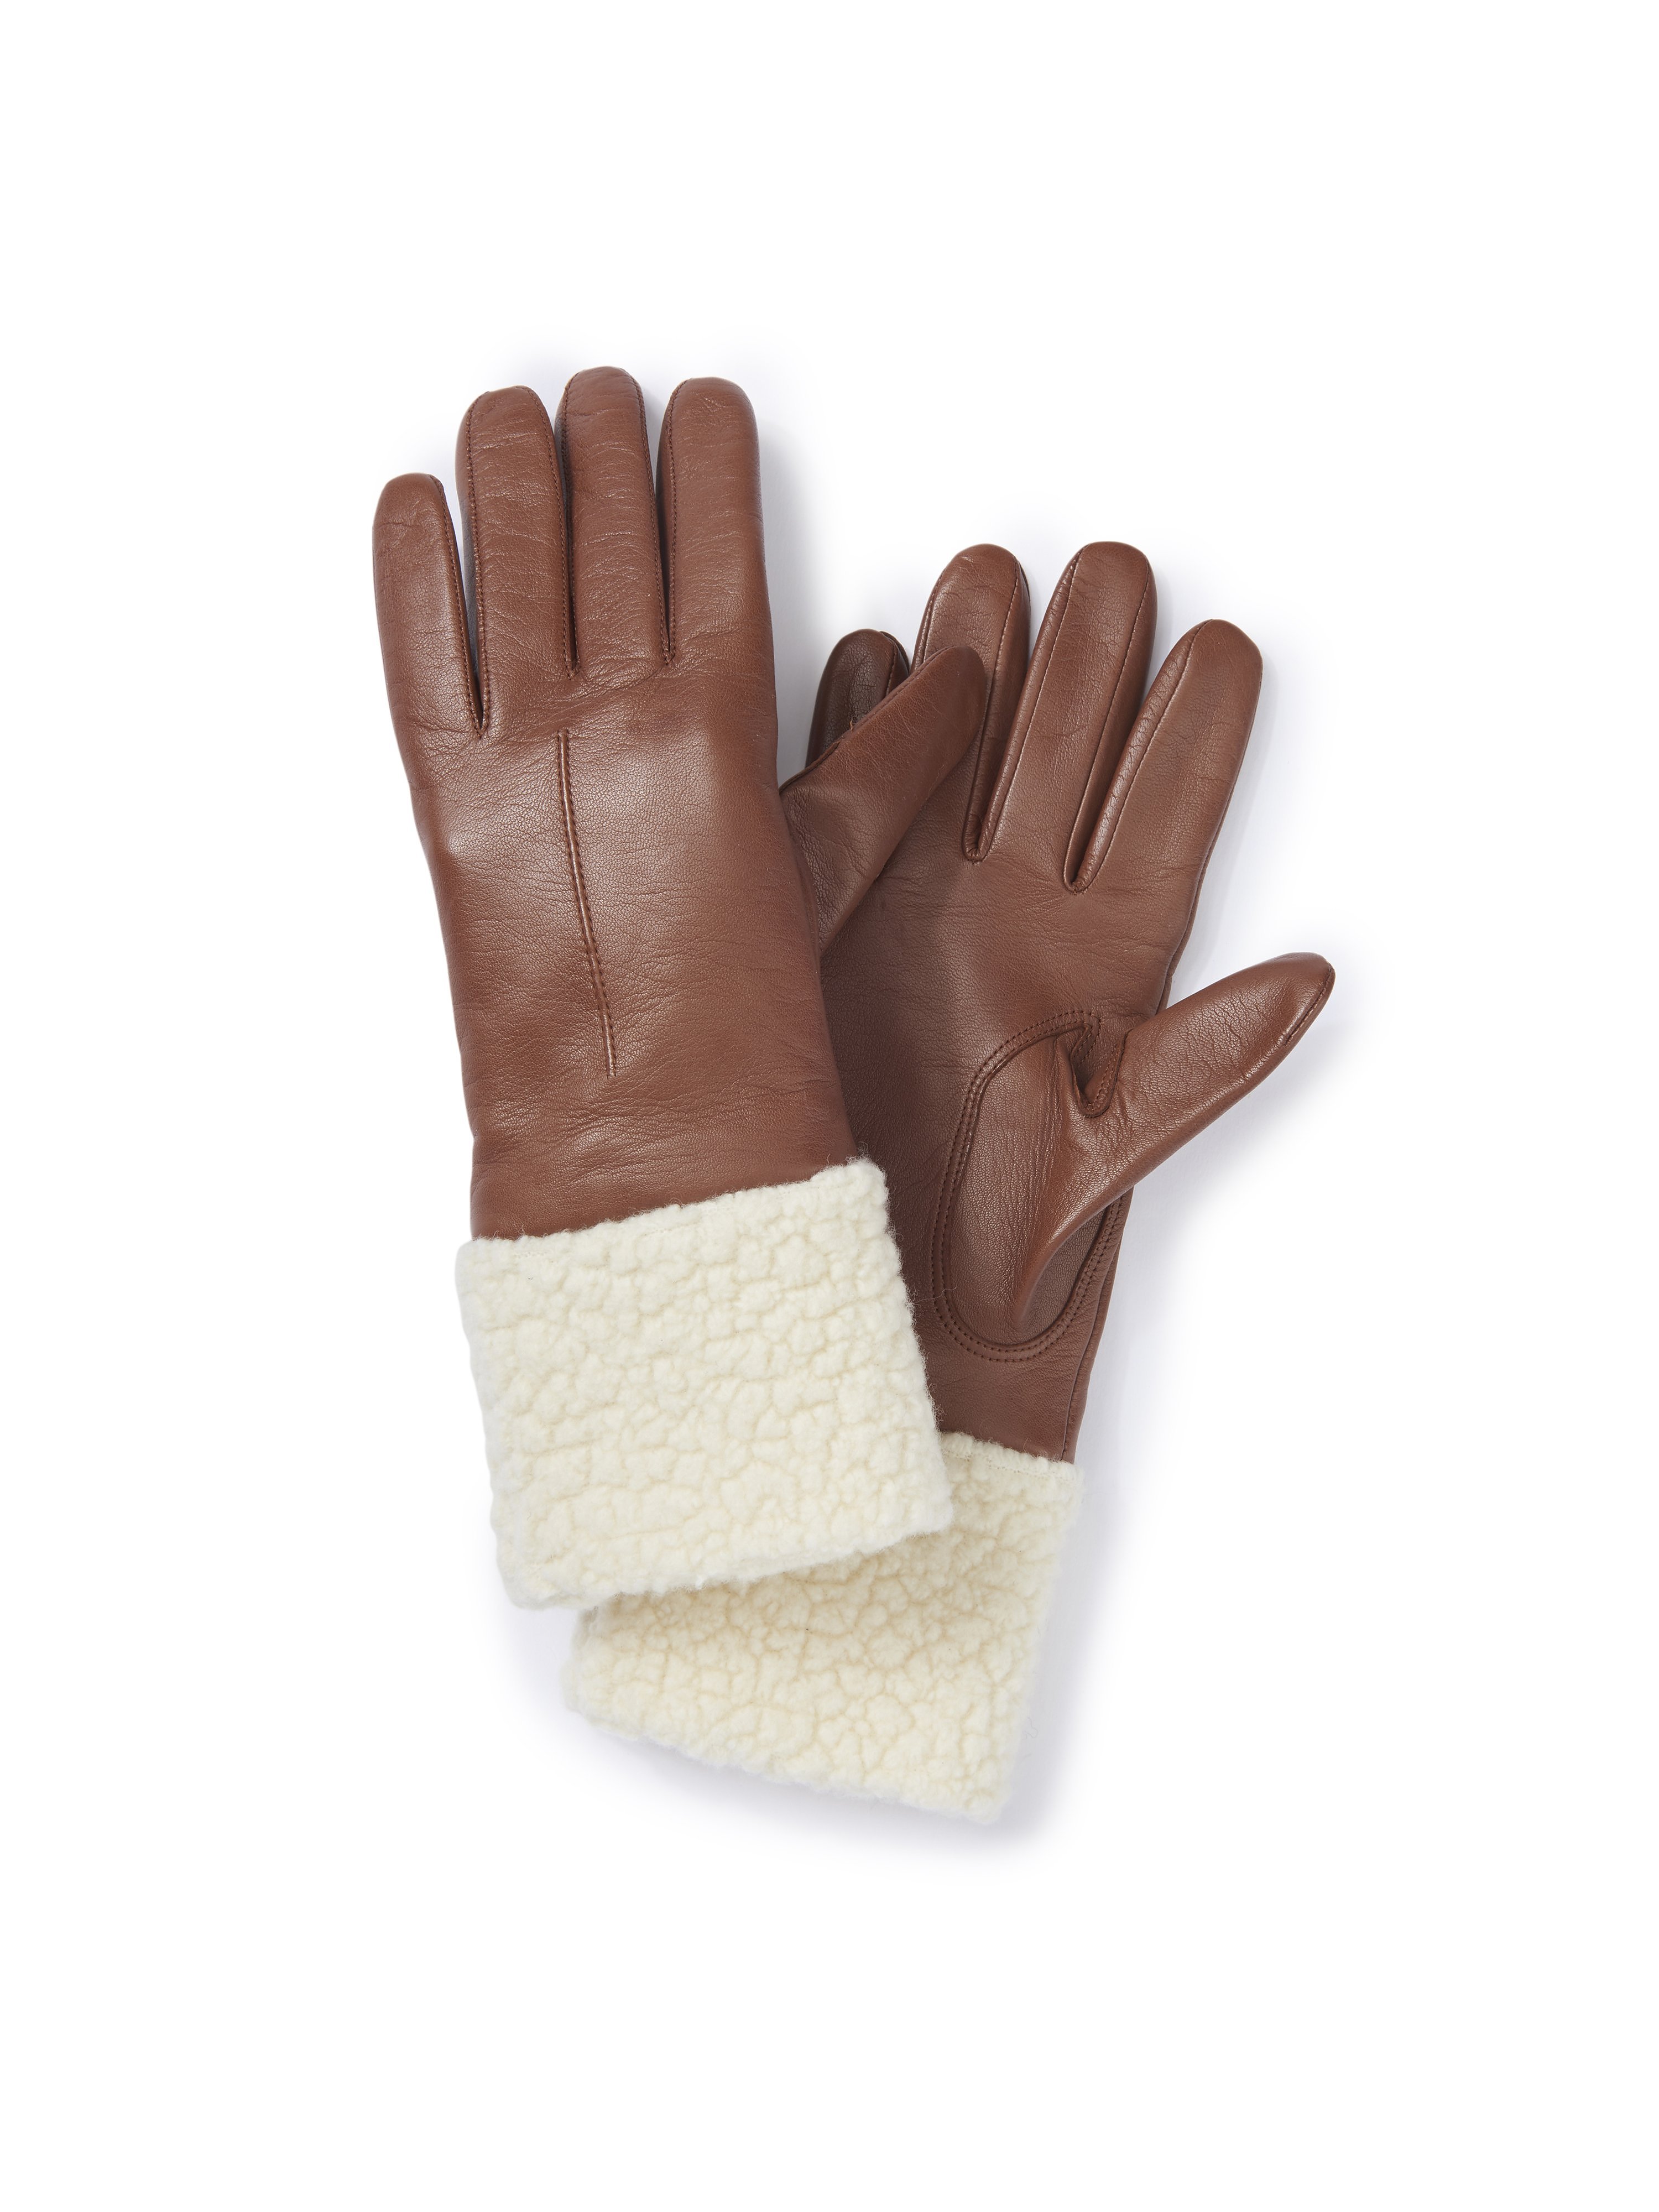 Les gants cuir nappa mouton  Roeckl marron taille 7,5